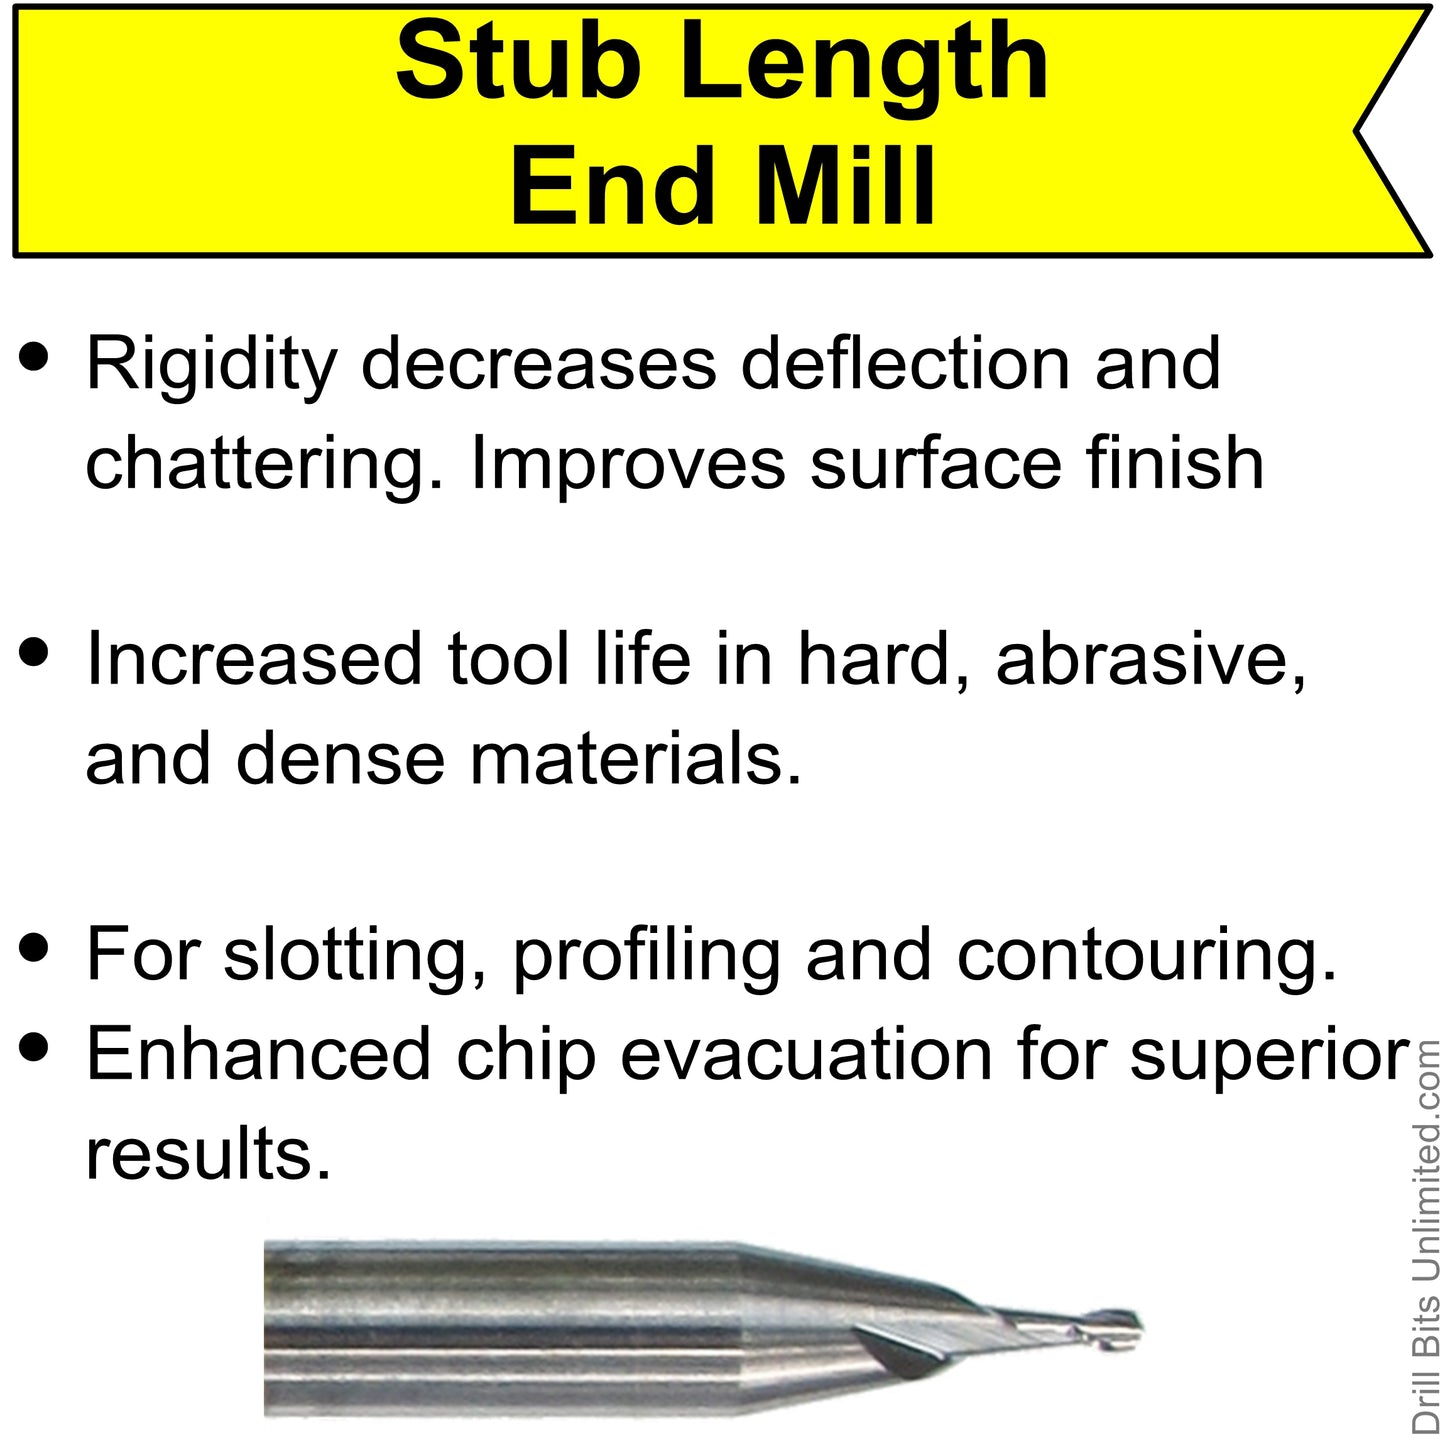 stub length end mill